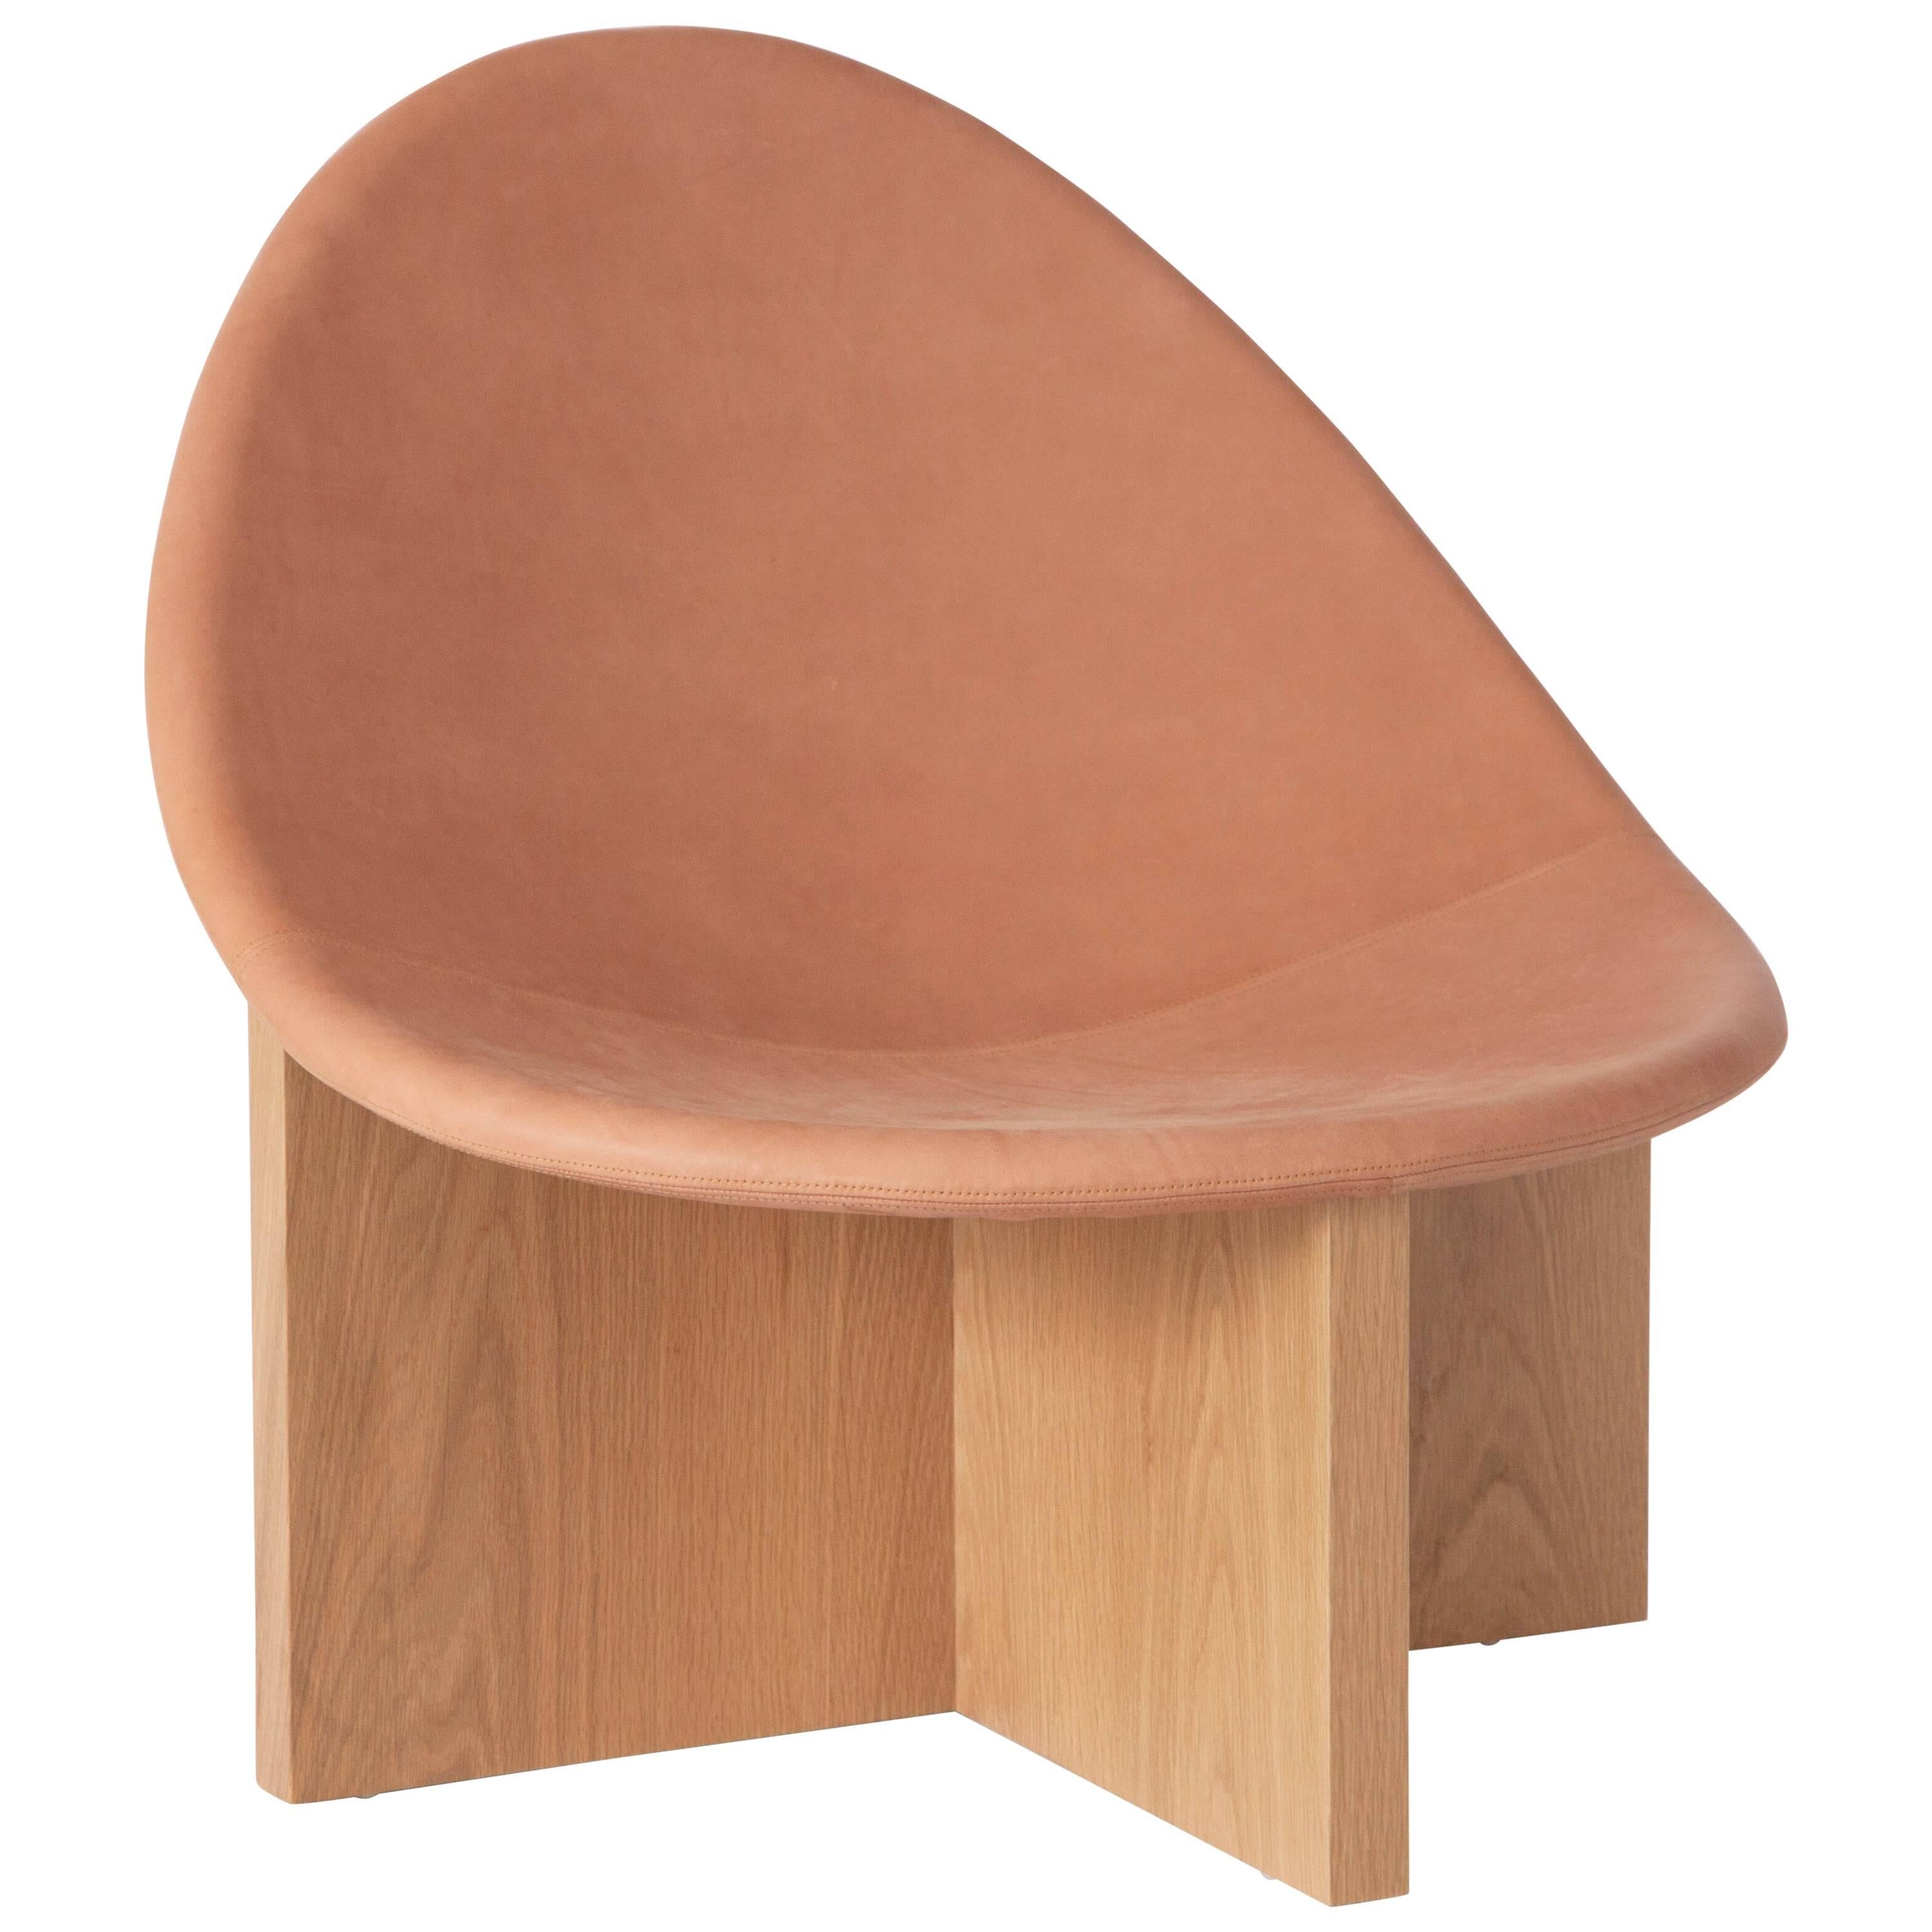 NIDO Modern Lounge Chair in White Oak & Blush Leather by Estudio Persona